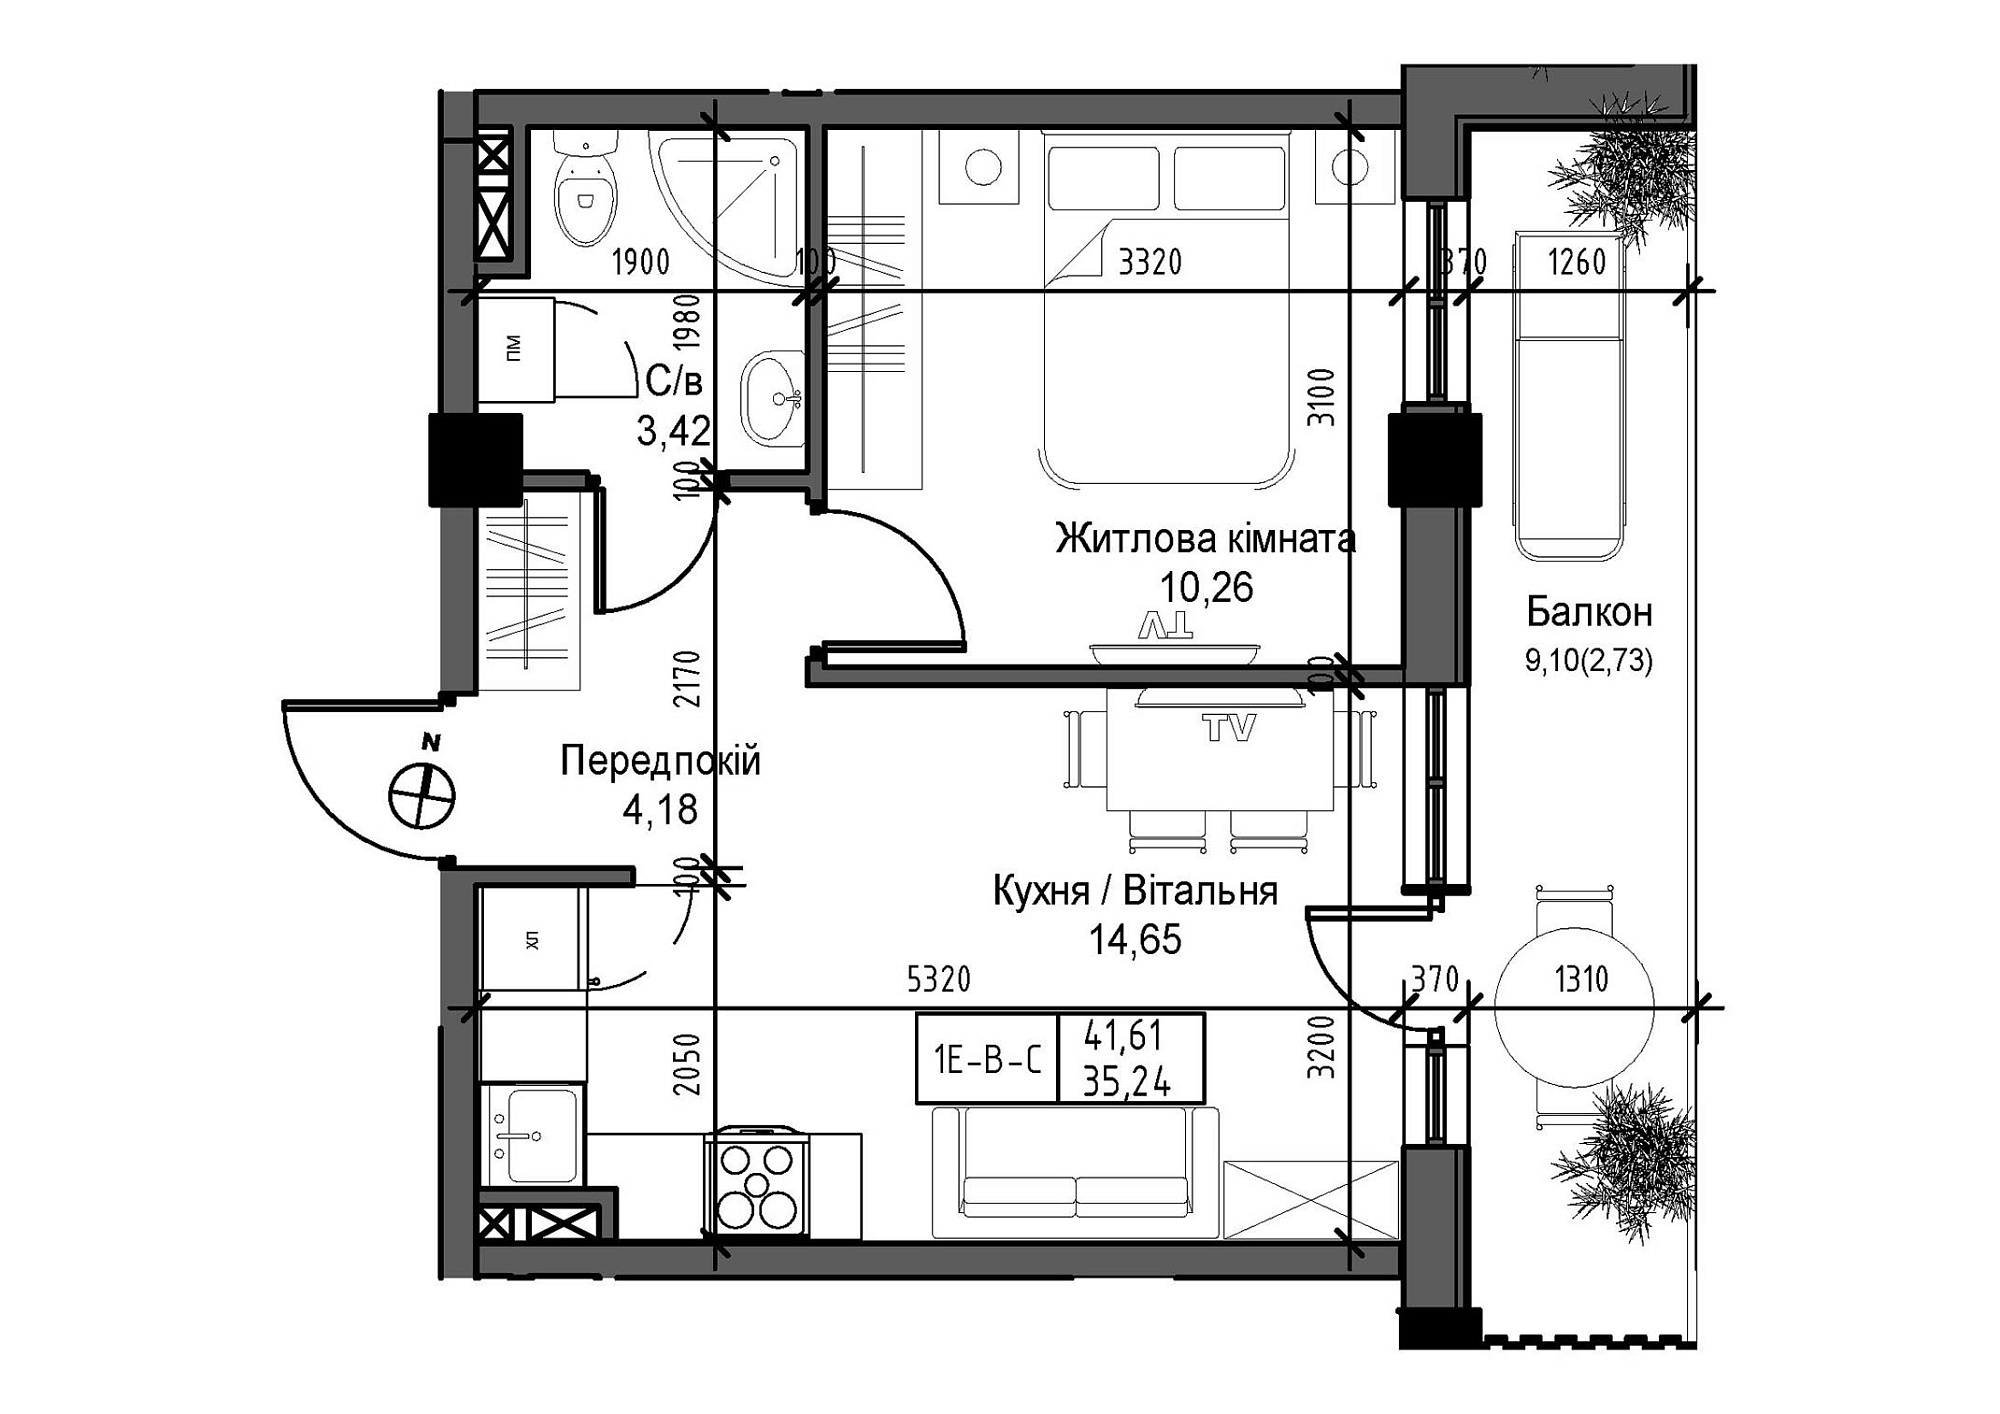 Планування 1-к квартира площею 35.24м2, UM-007-03/0004.